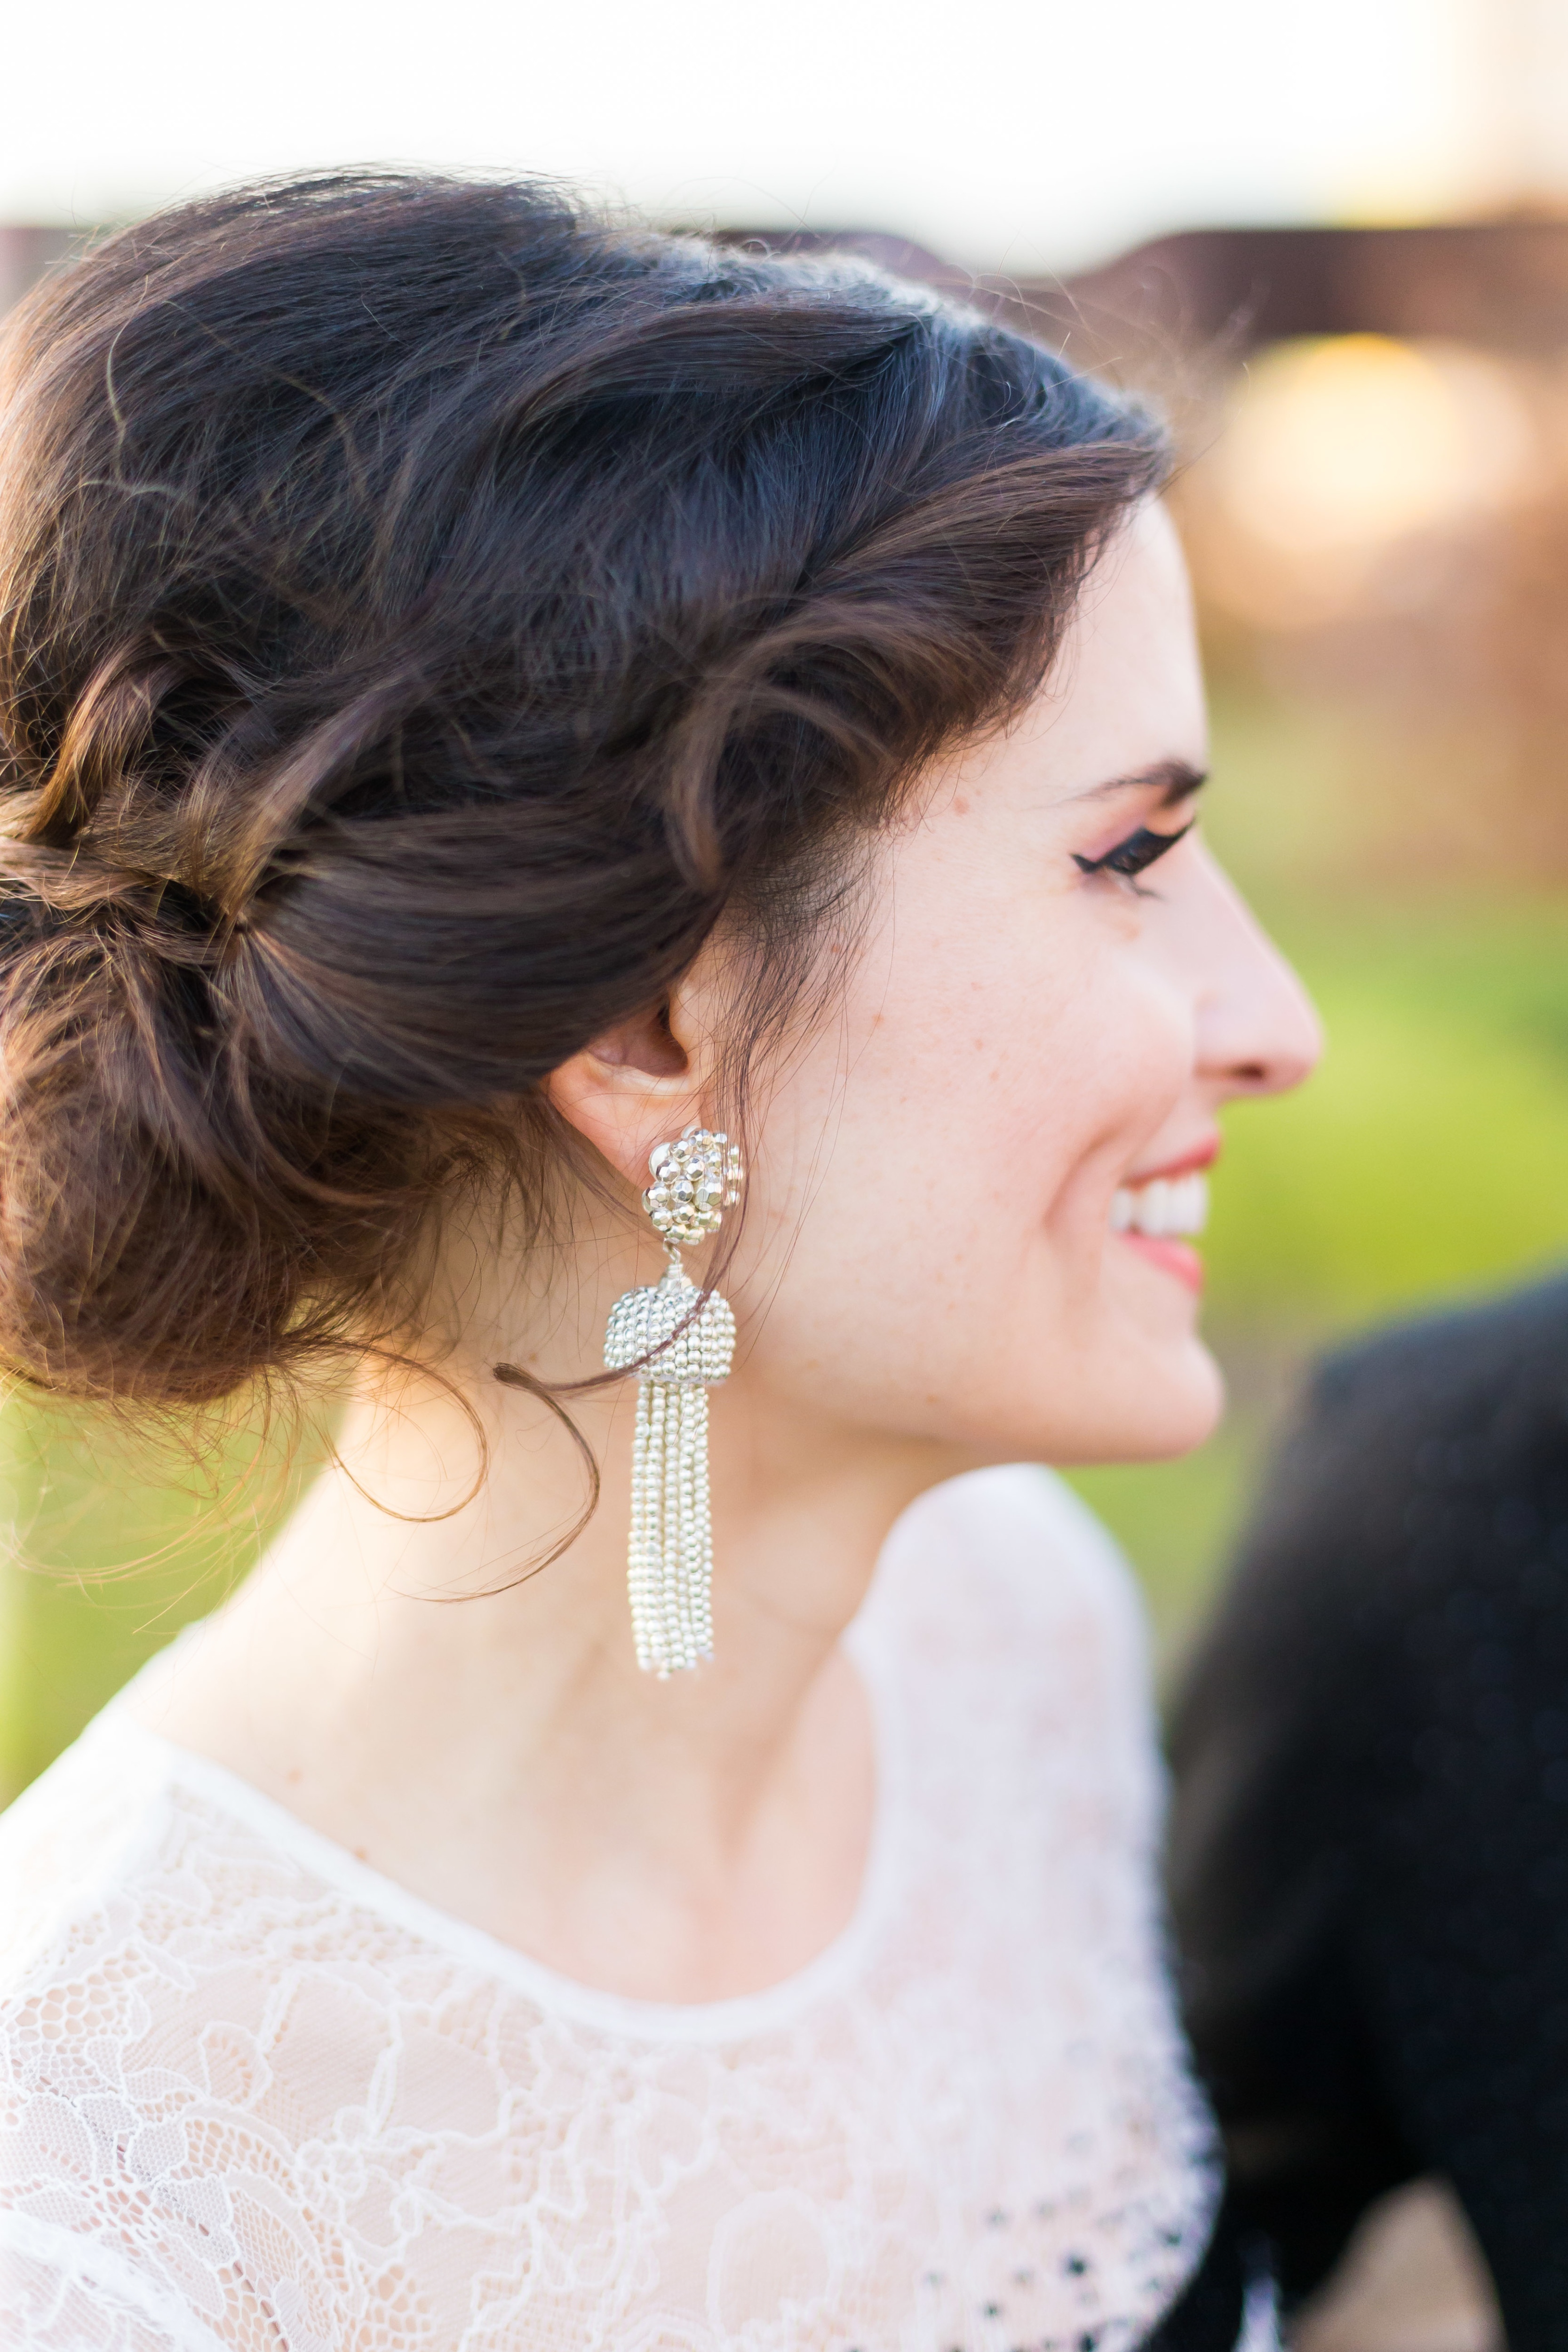 fashion-blogger-chignon-lisi-lerch-tassel-earrings